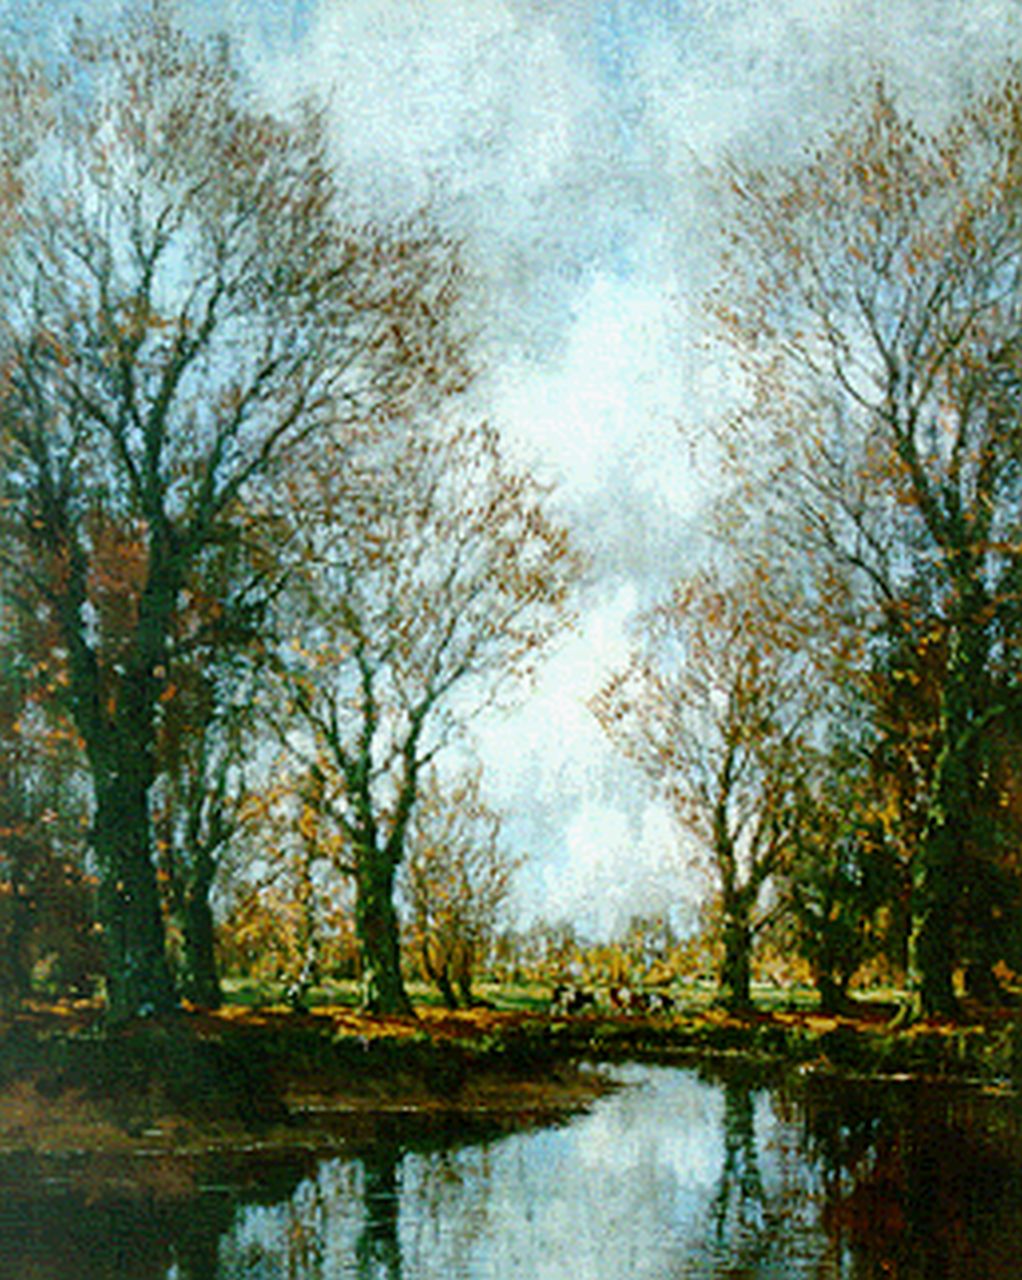 Gorter A.M.  | 'Arnold' Marc Gorter, A pond in a wooded landscape, Öl auf Leinwand 50,4 x 40,5 cm, signed l.r.